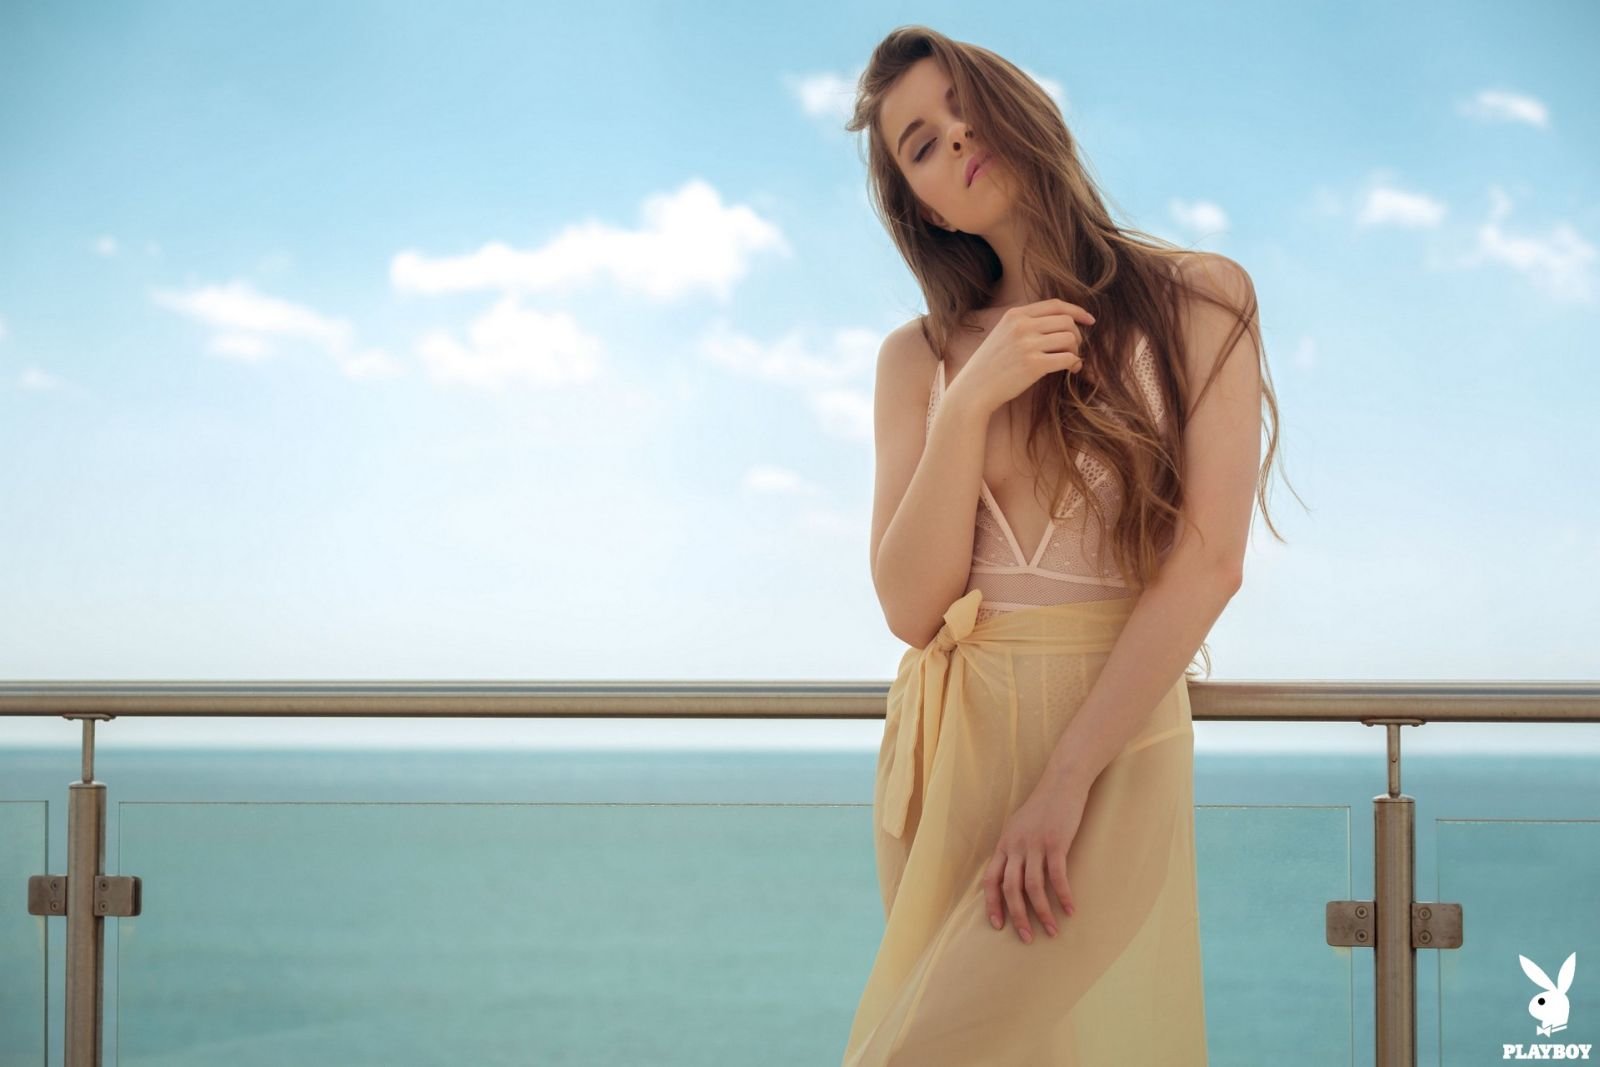 Young beauty Kate Chromia poses nude on a beach balcony